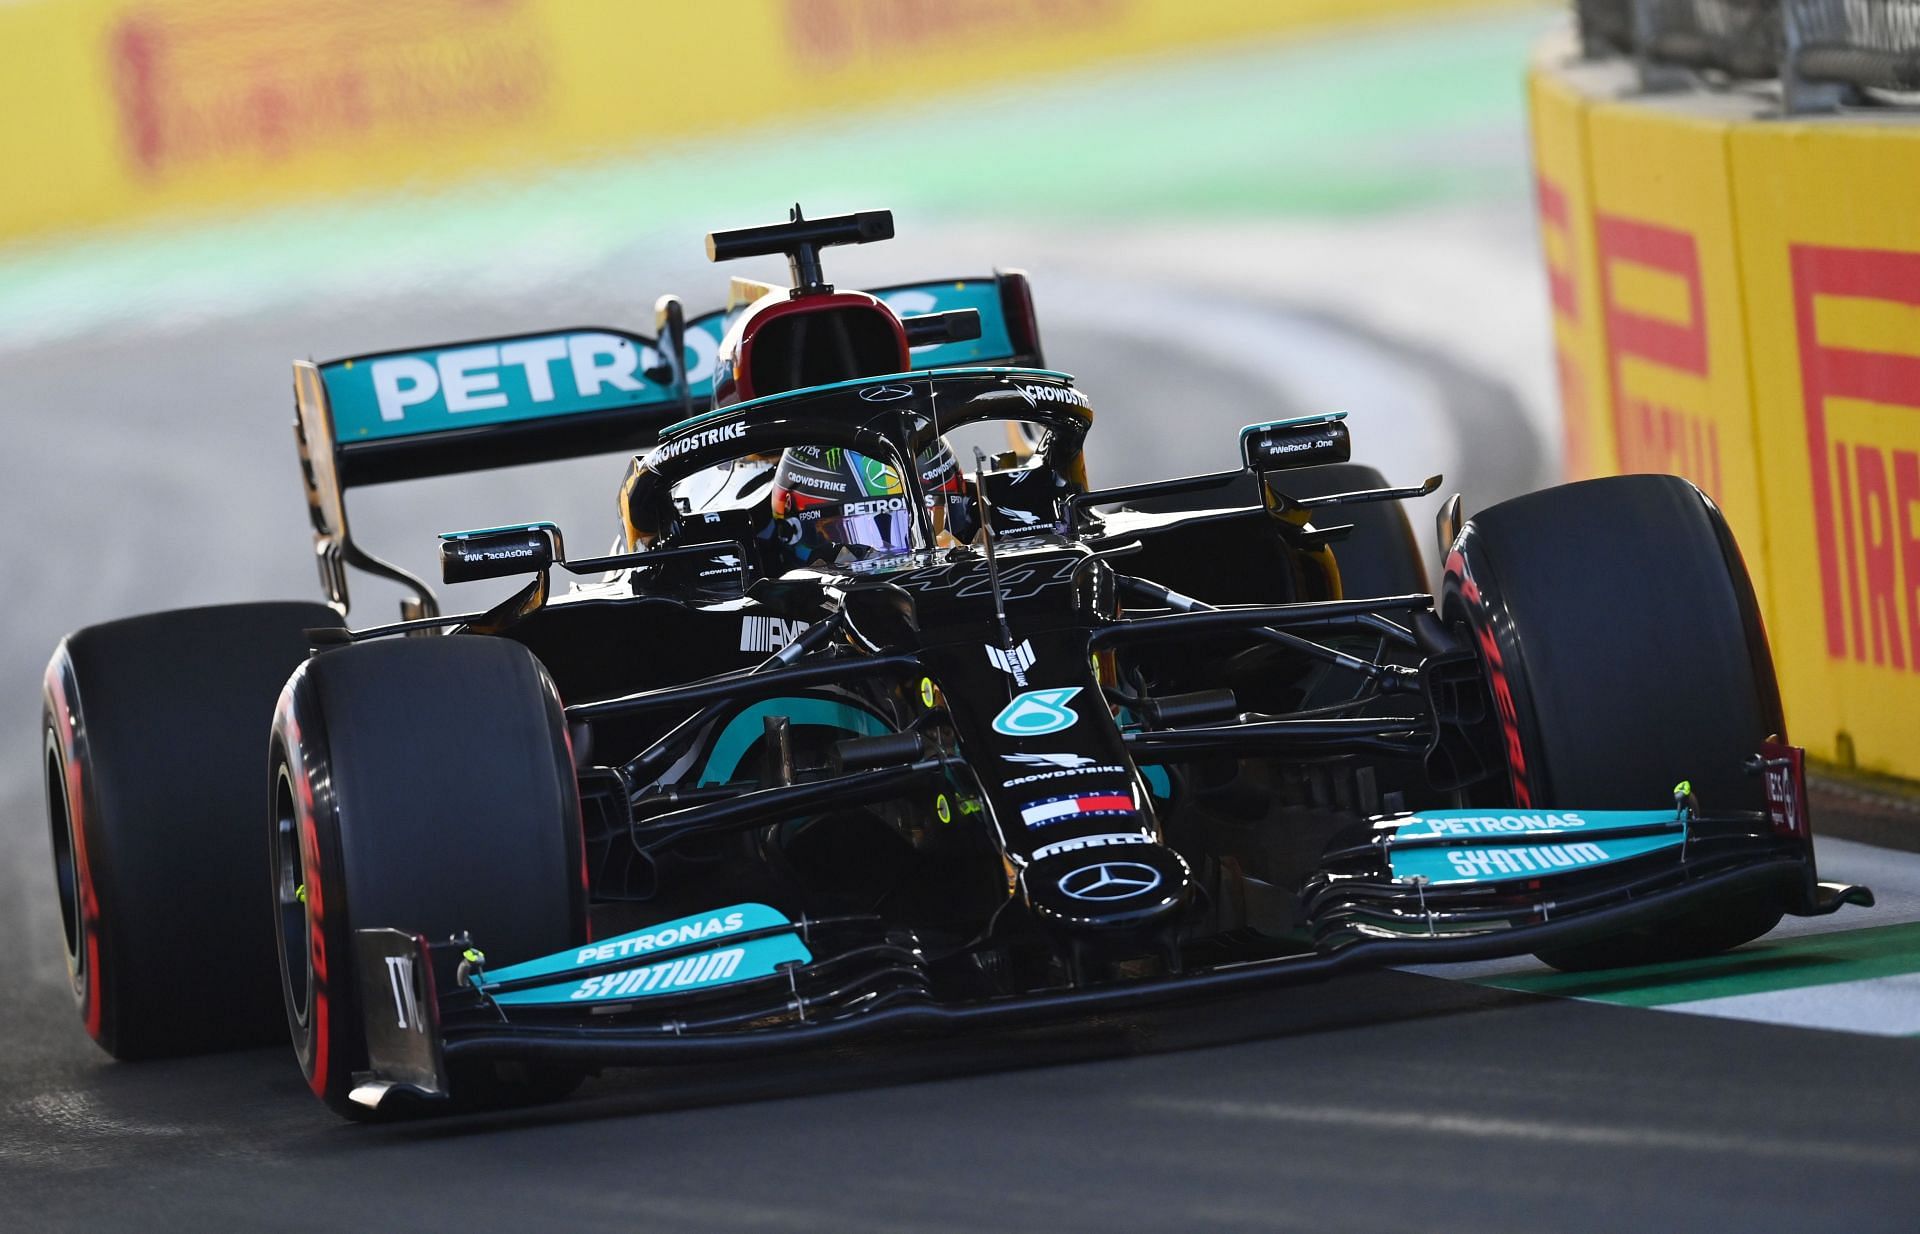 Lewis Hamilton (44) driving the Mercedes W13 ahead of the 2021 Saudi Arabian Grand Prix